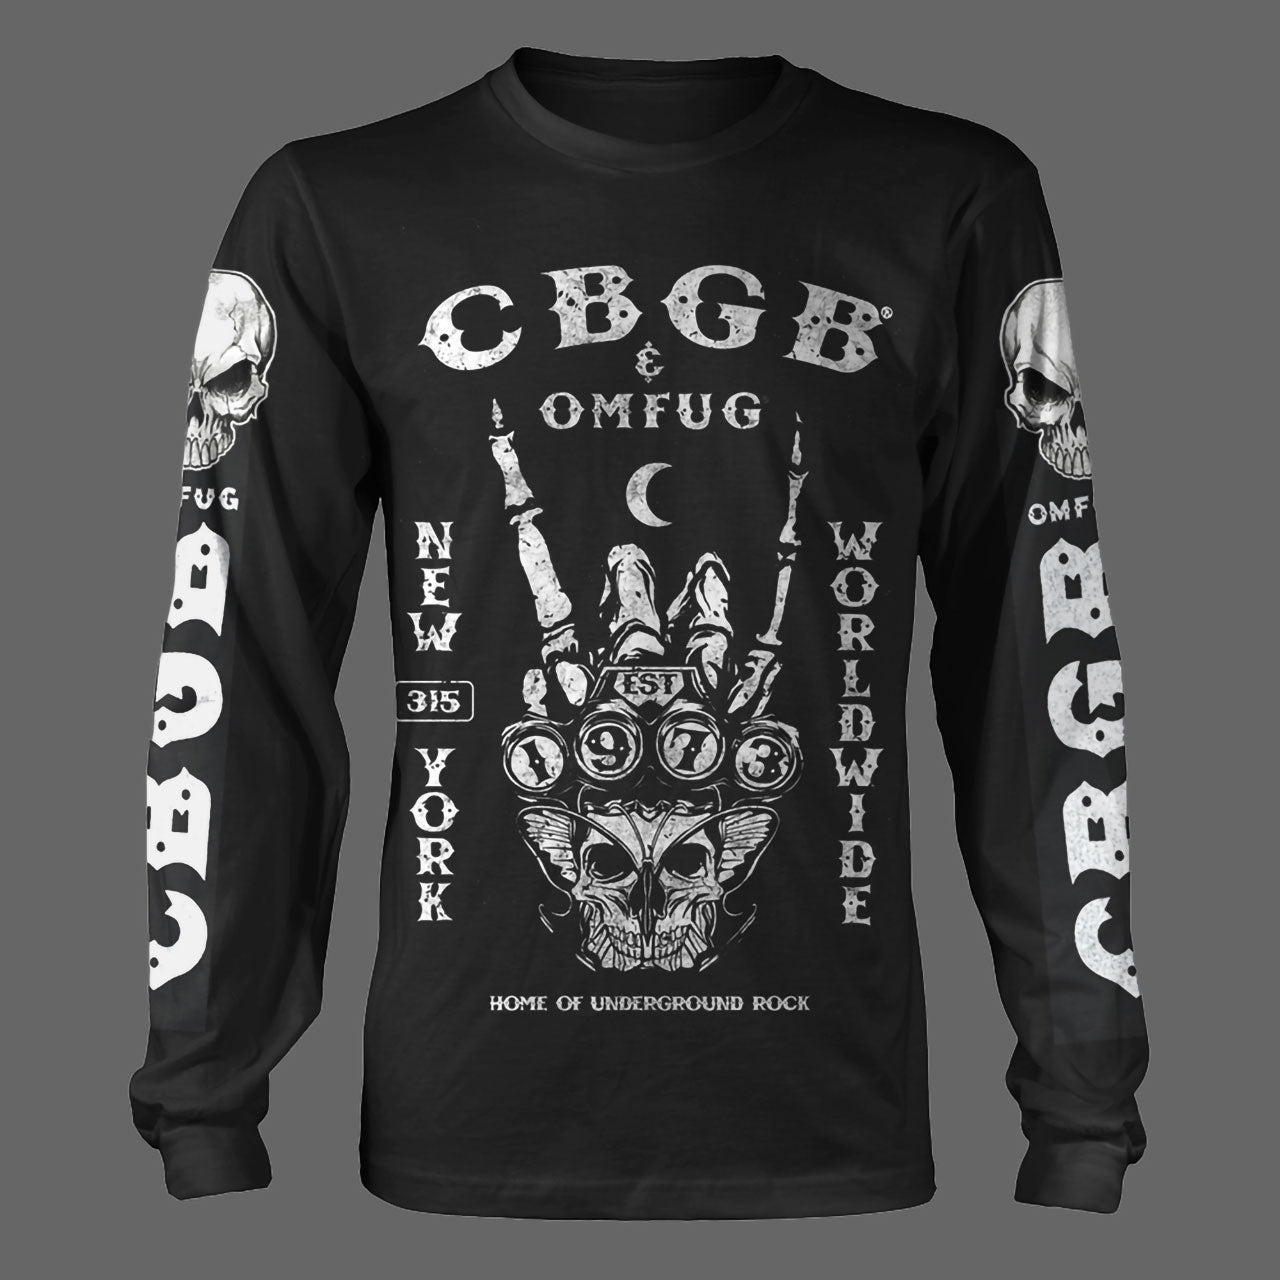 CBGB Est 1973 (Long Sleeve T-Shirt)